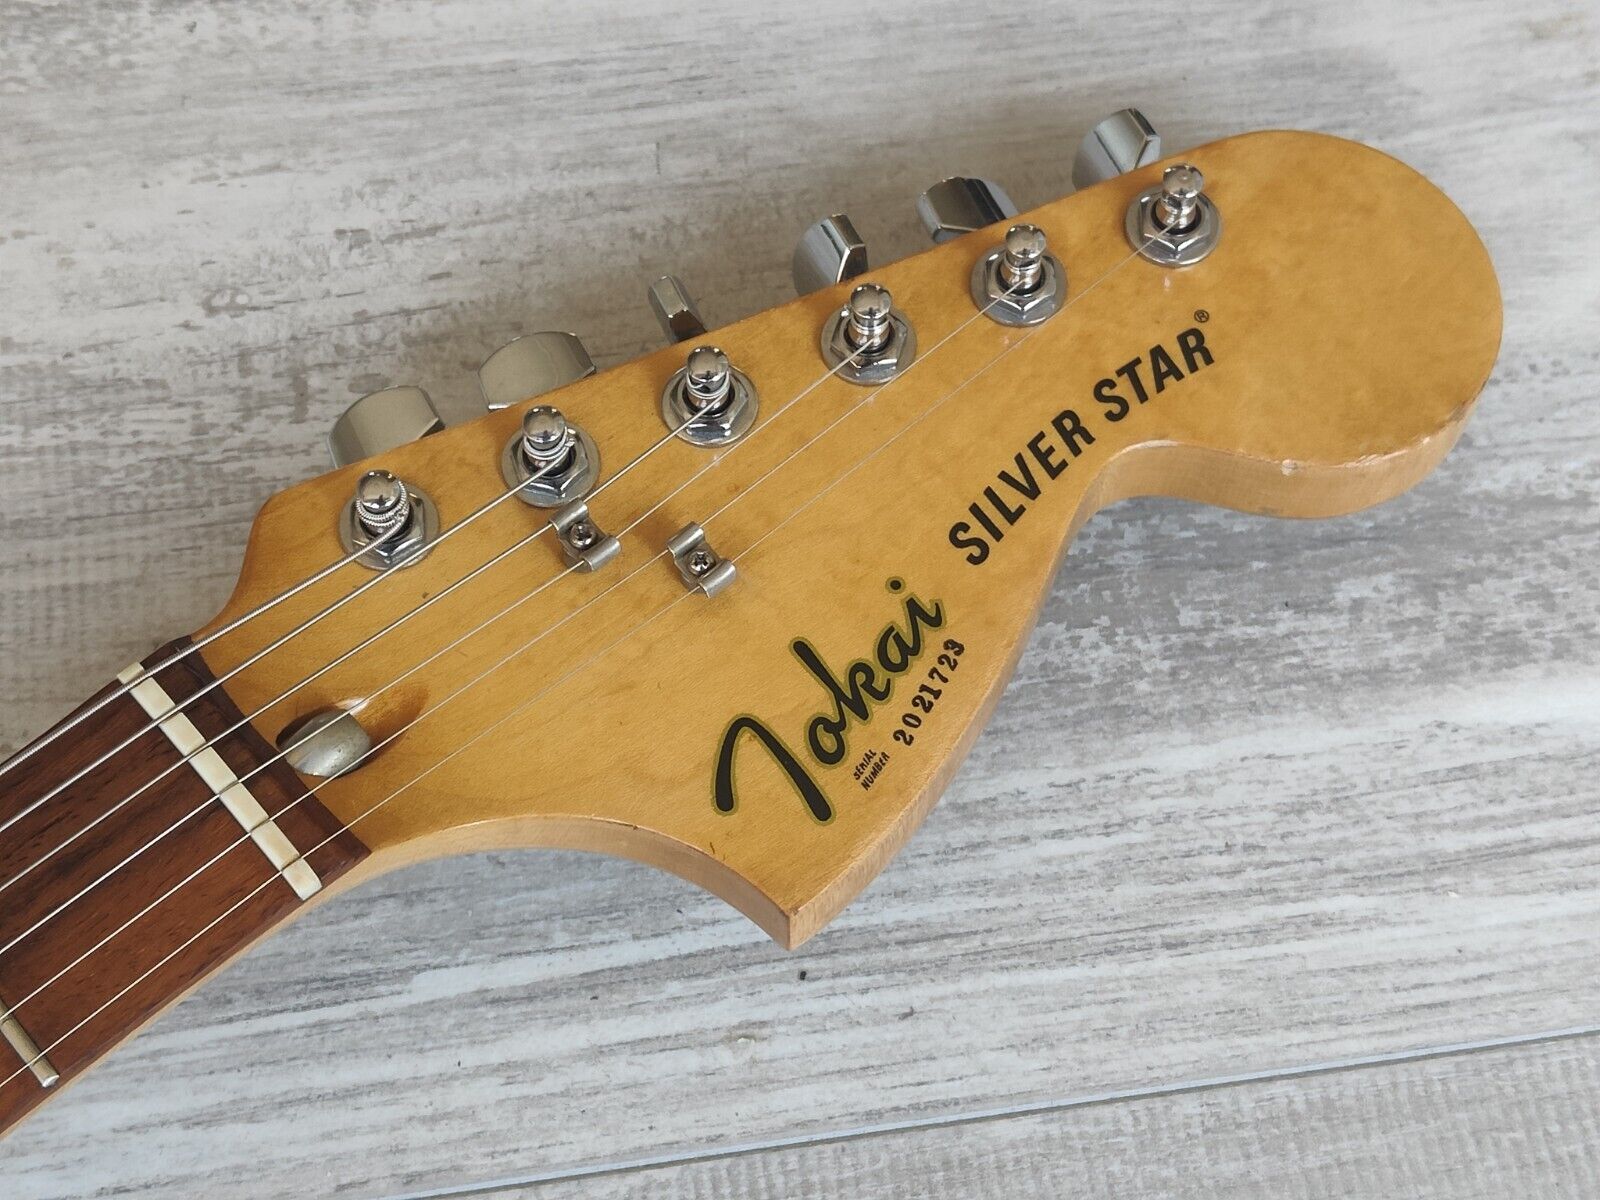 1982 Tokai Japan SS-48 Silver Star Scallop Stratocaster (Vintage Olympic White)